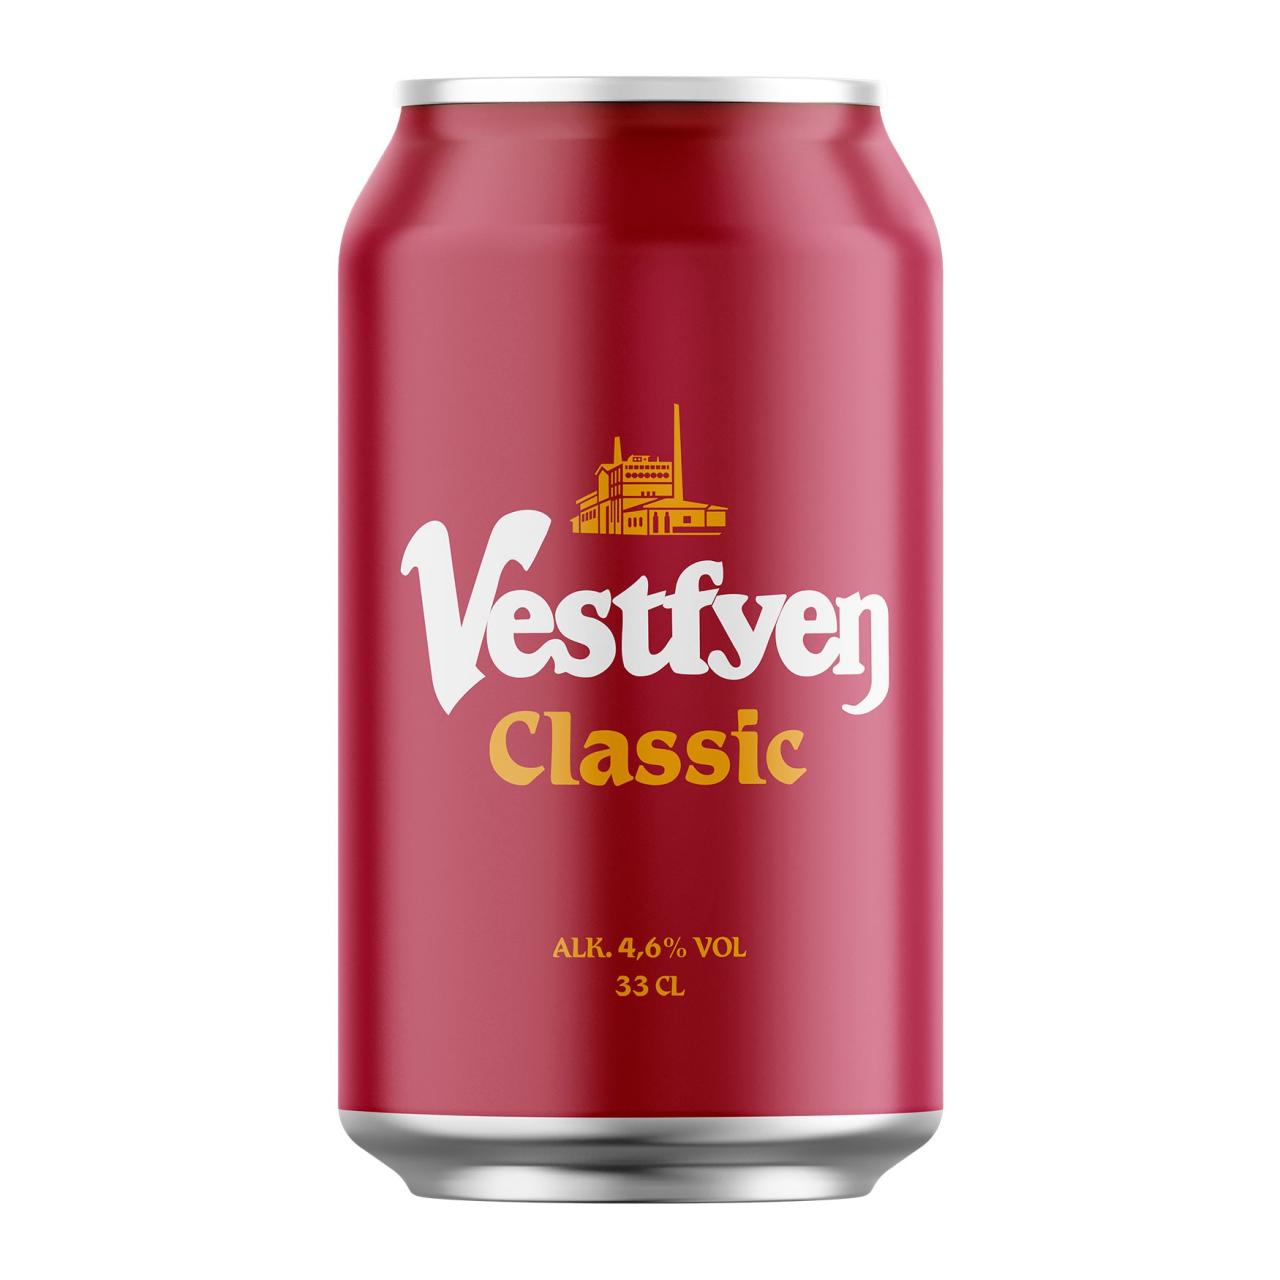 Vestfyen Classic 4,6% 24x0,33l Dose